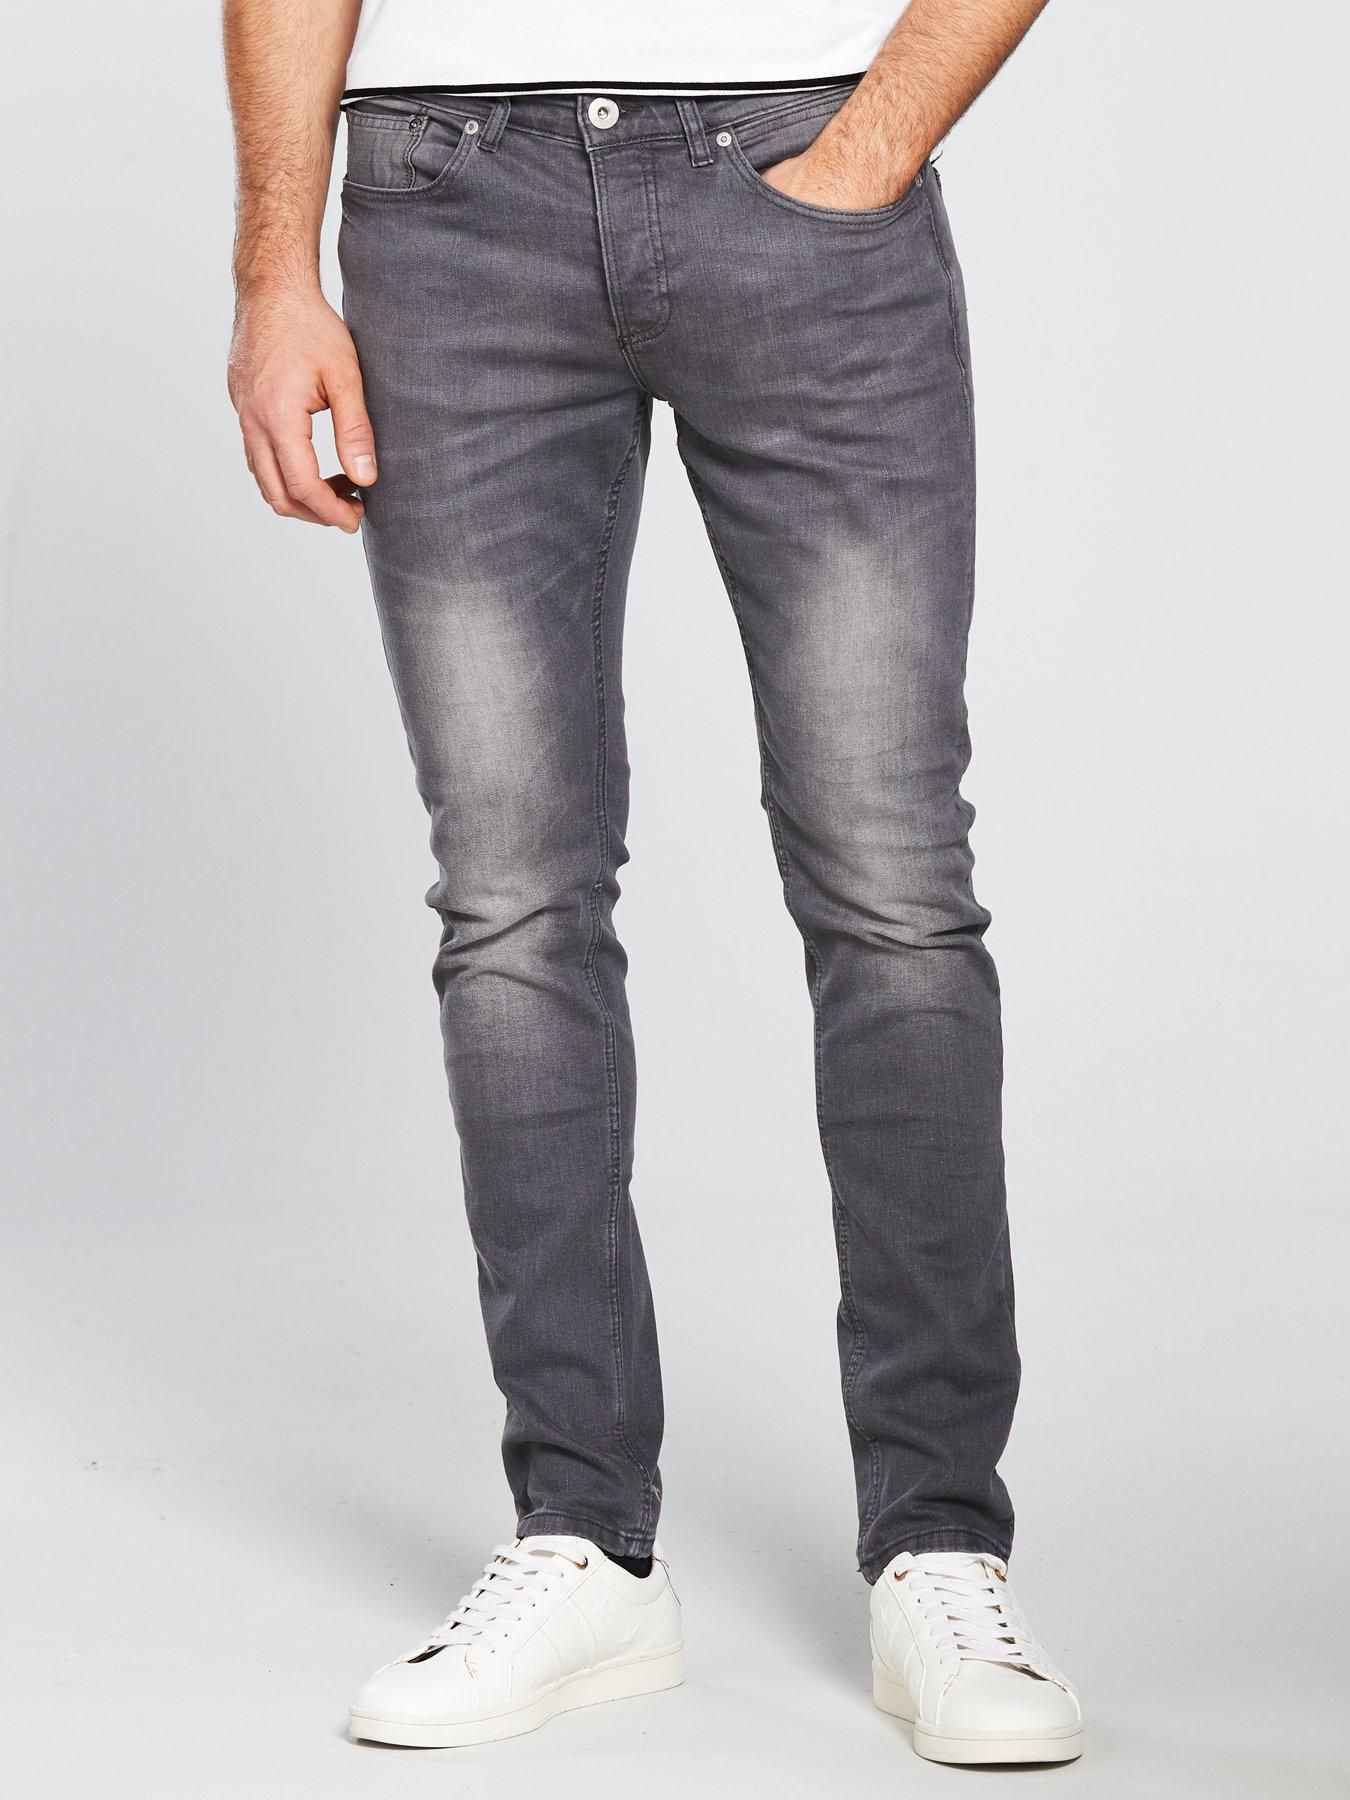 river island grey jeans